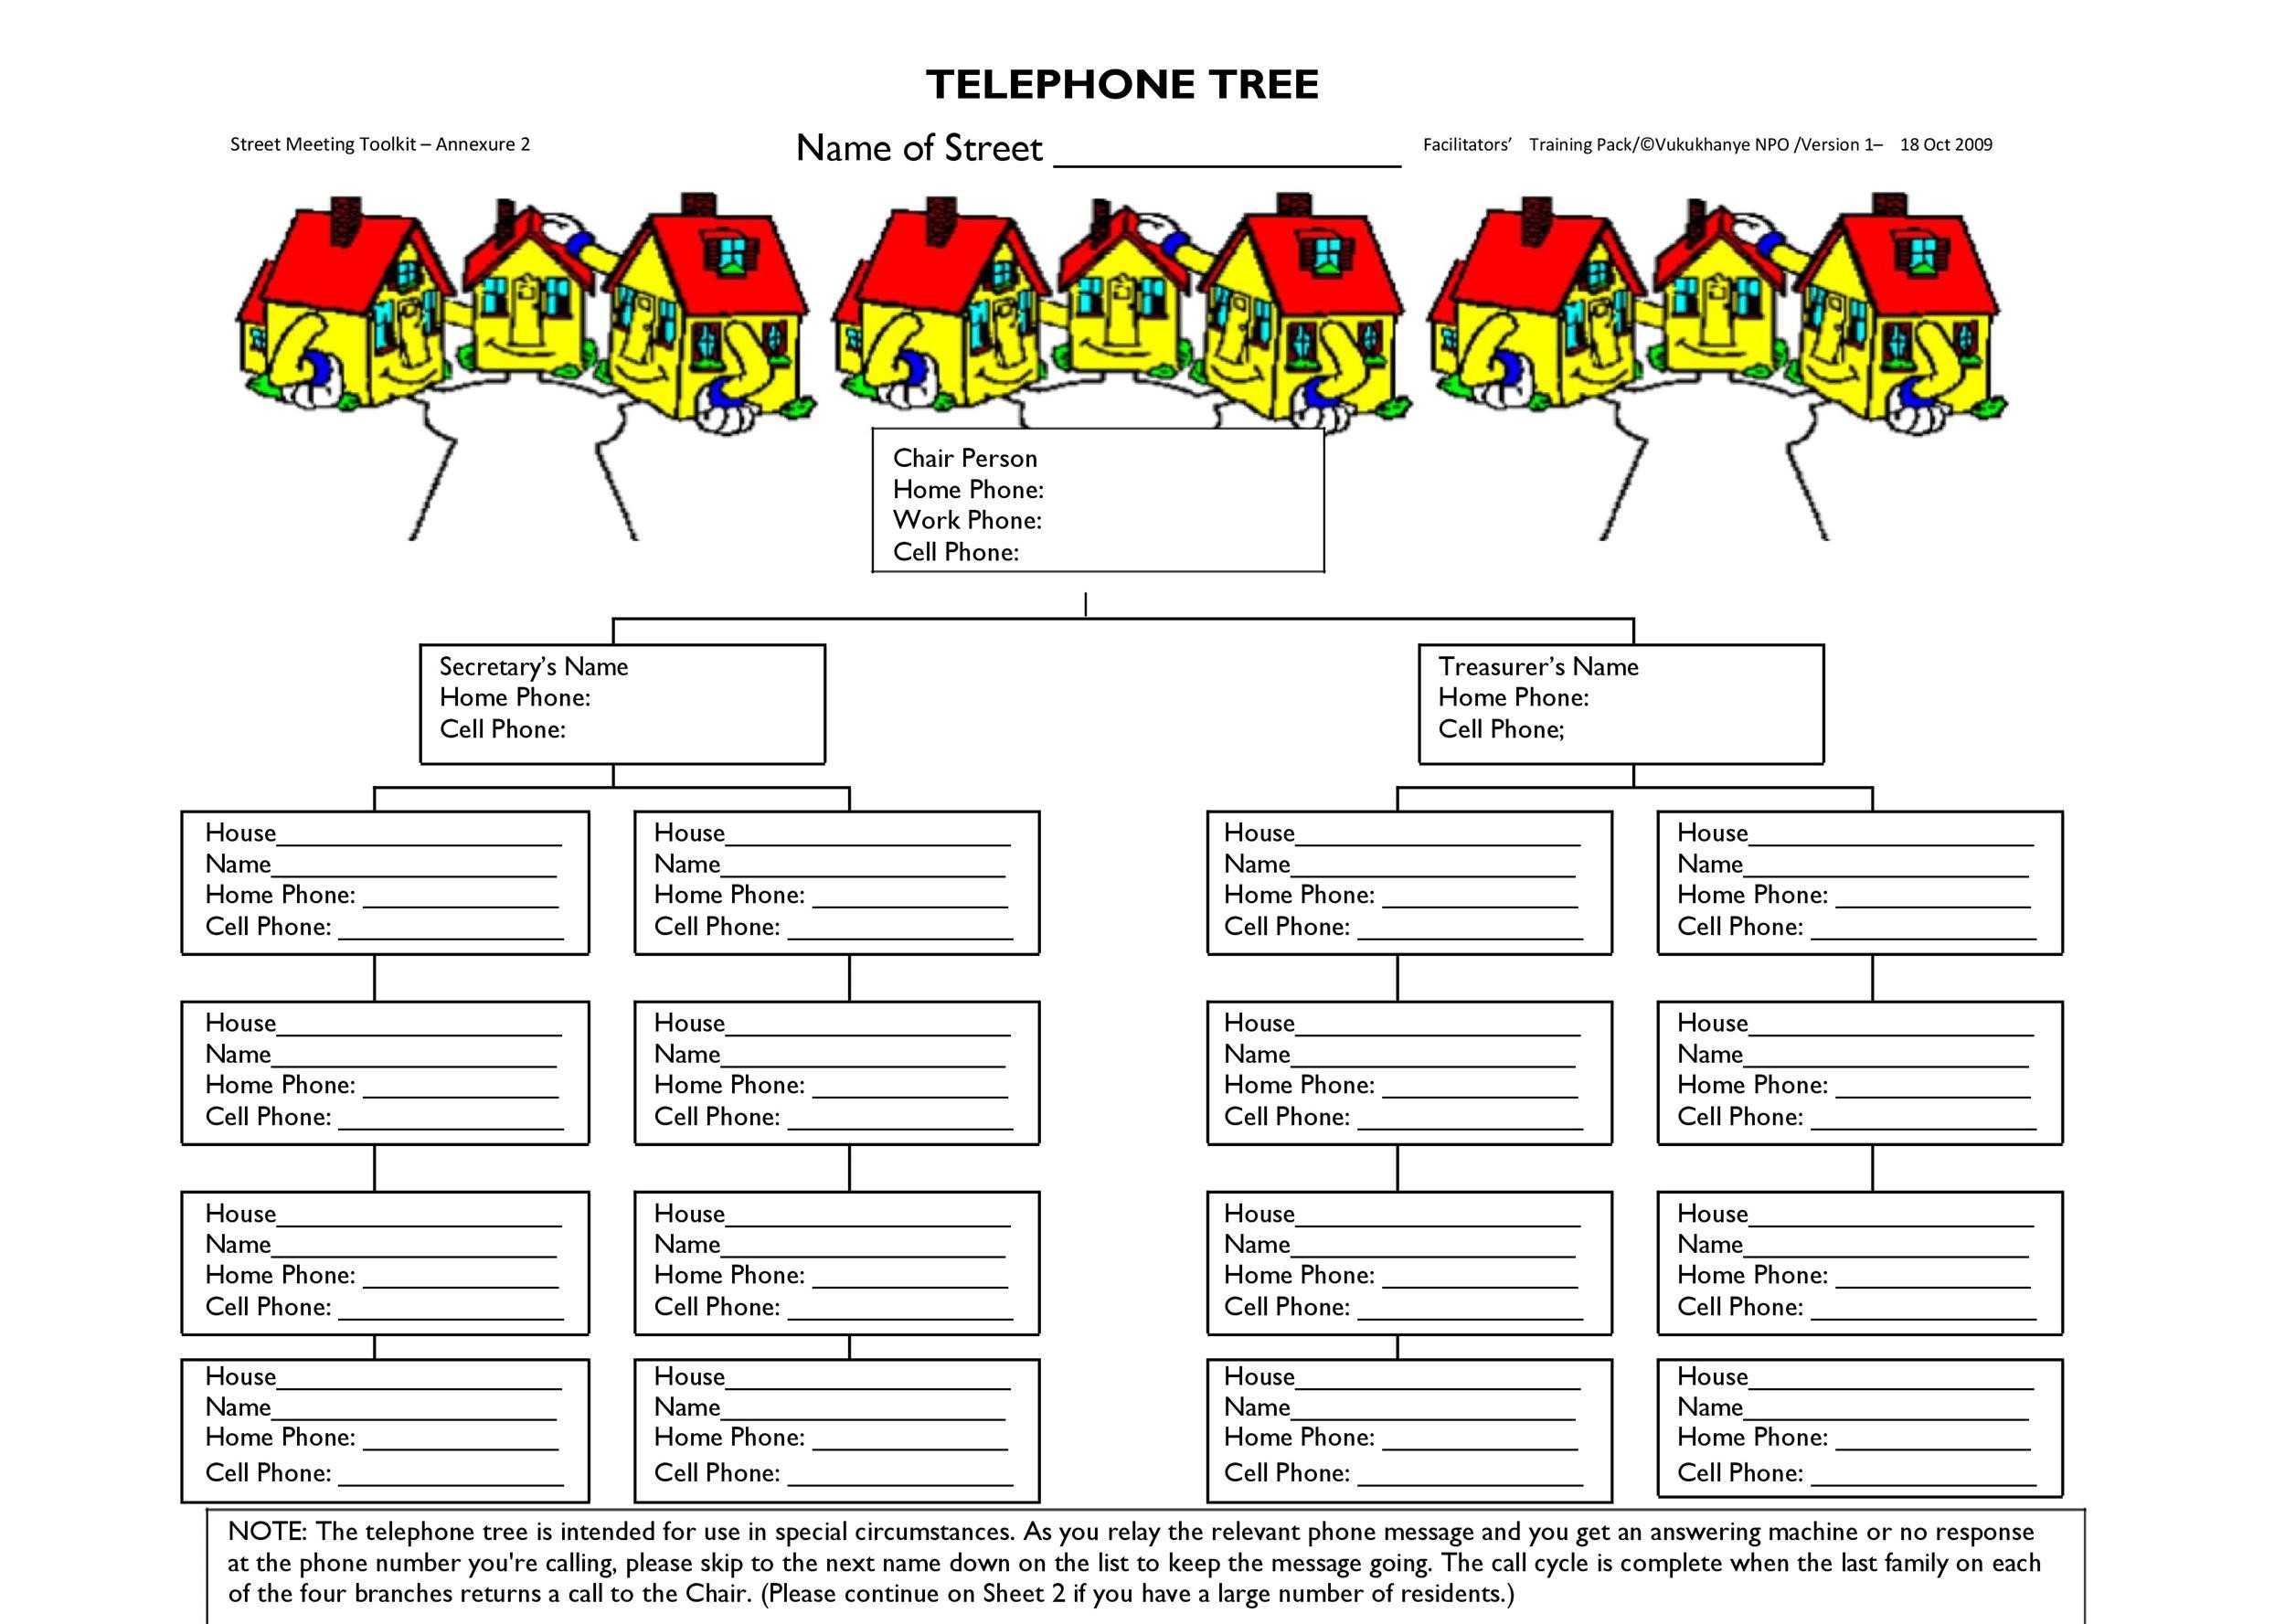 50 Free Phone Tree Templates (MS Word & Excel) ᐅ TemplateLab